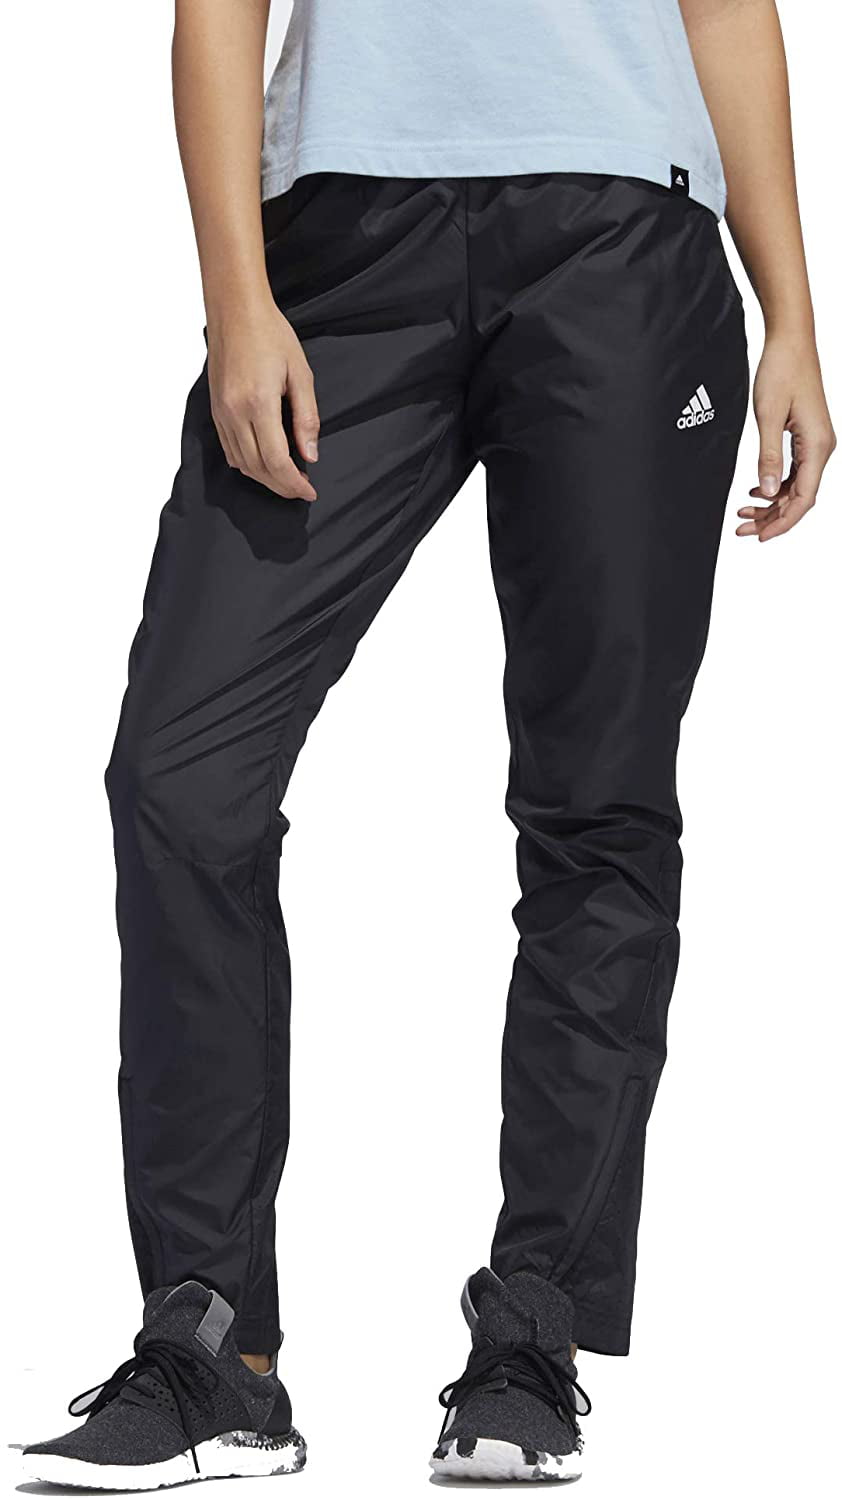 Coro una vez Ridículo Adidas Women's Sport 2 Street Wind Pants Black/White, Large - Walmart.com